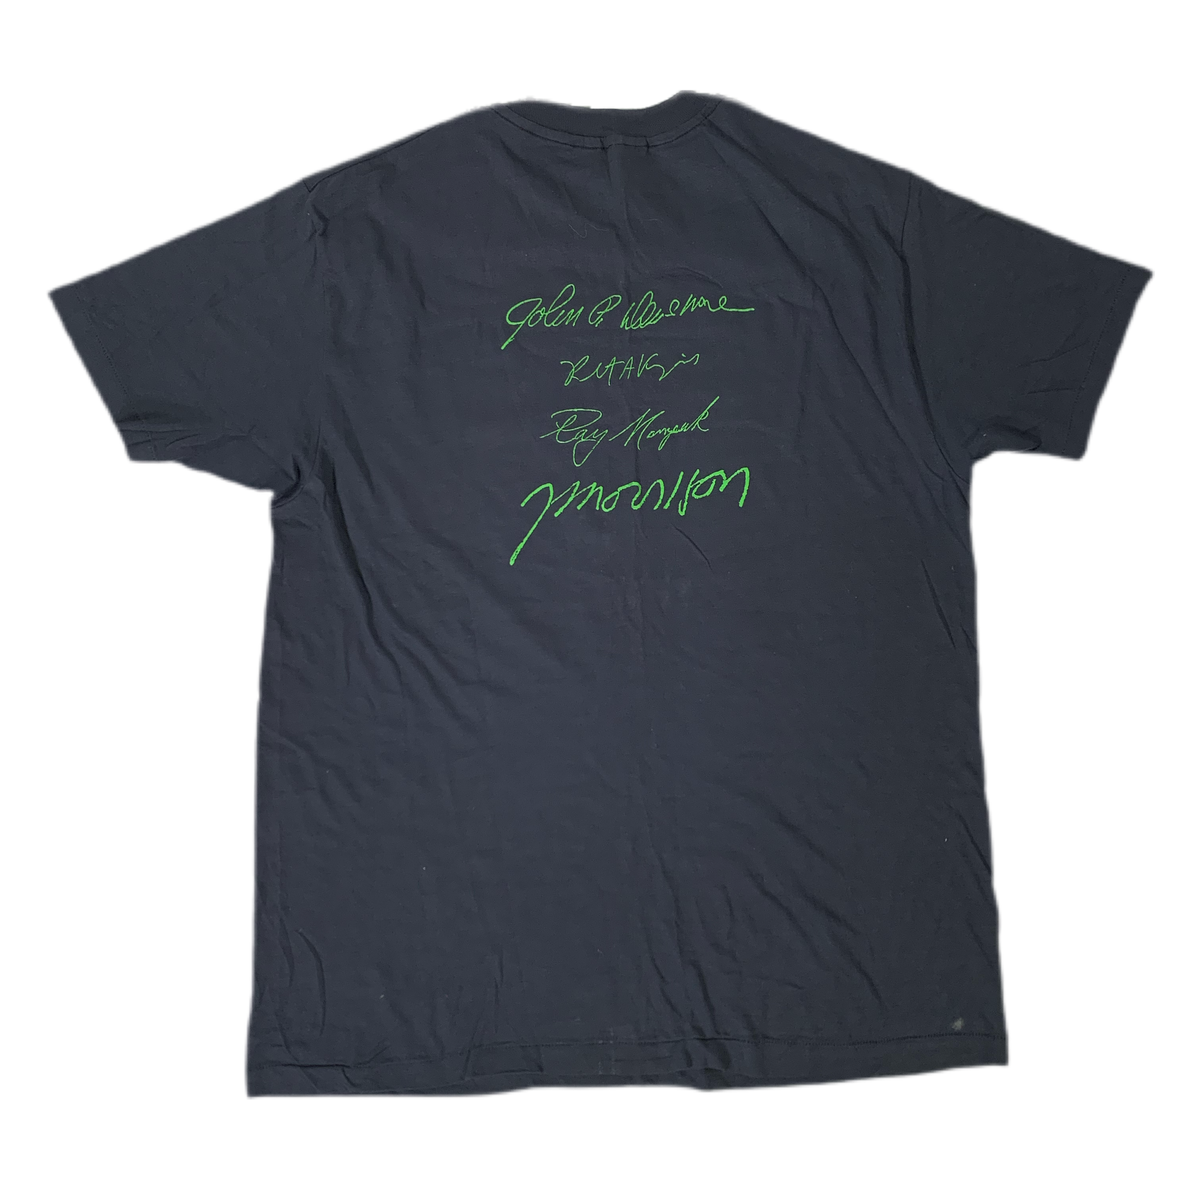 Vintage The Doors &quot;Self Titled&quot; T-Shirt